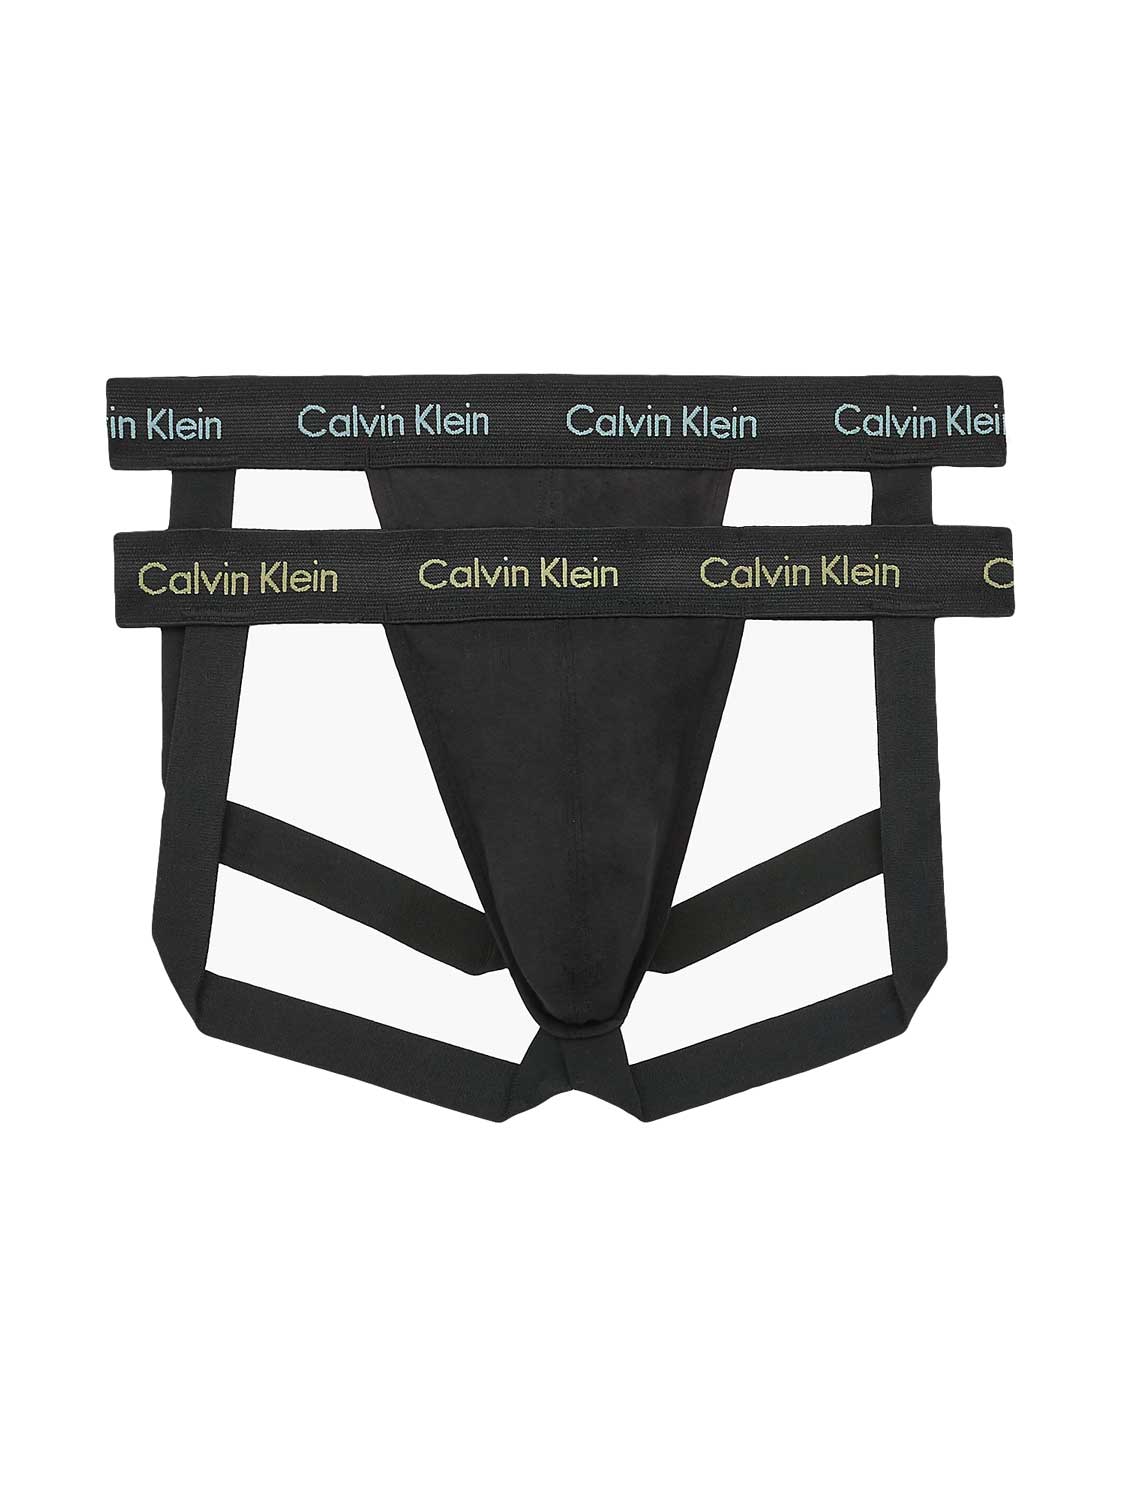 Calvin Klein 2P jockstraps zwart 6F2 - L